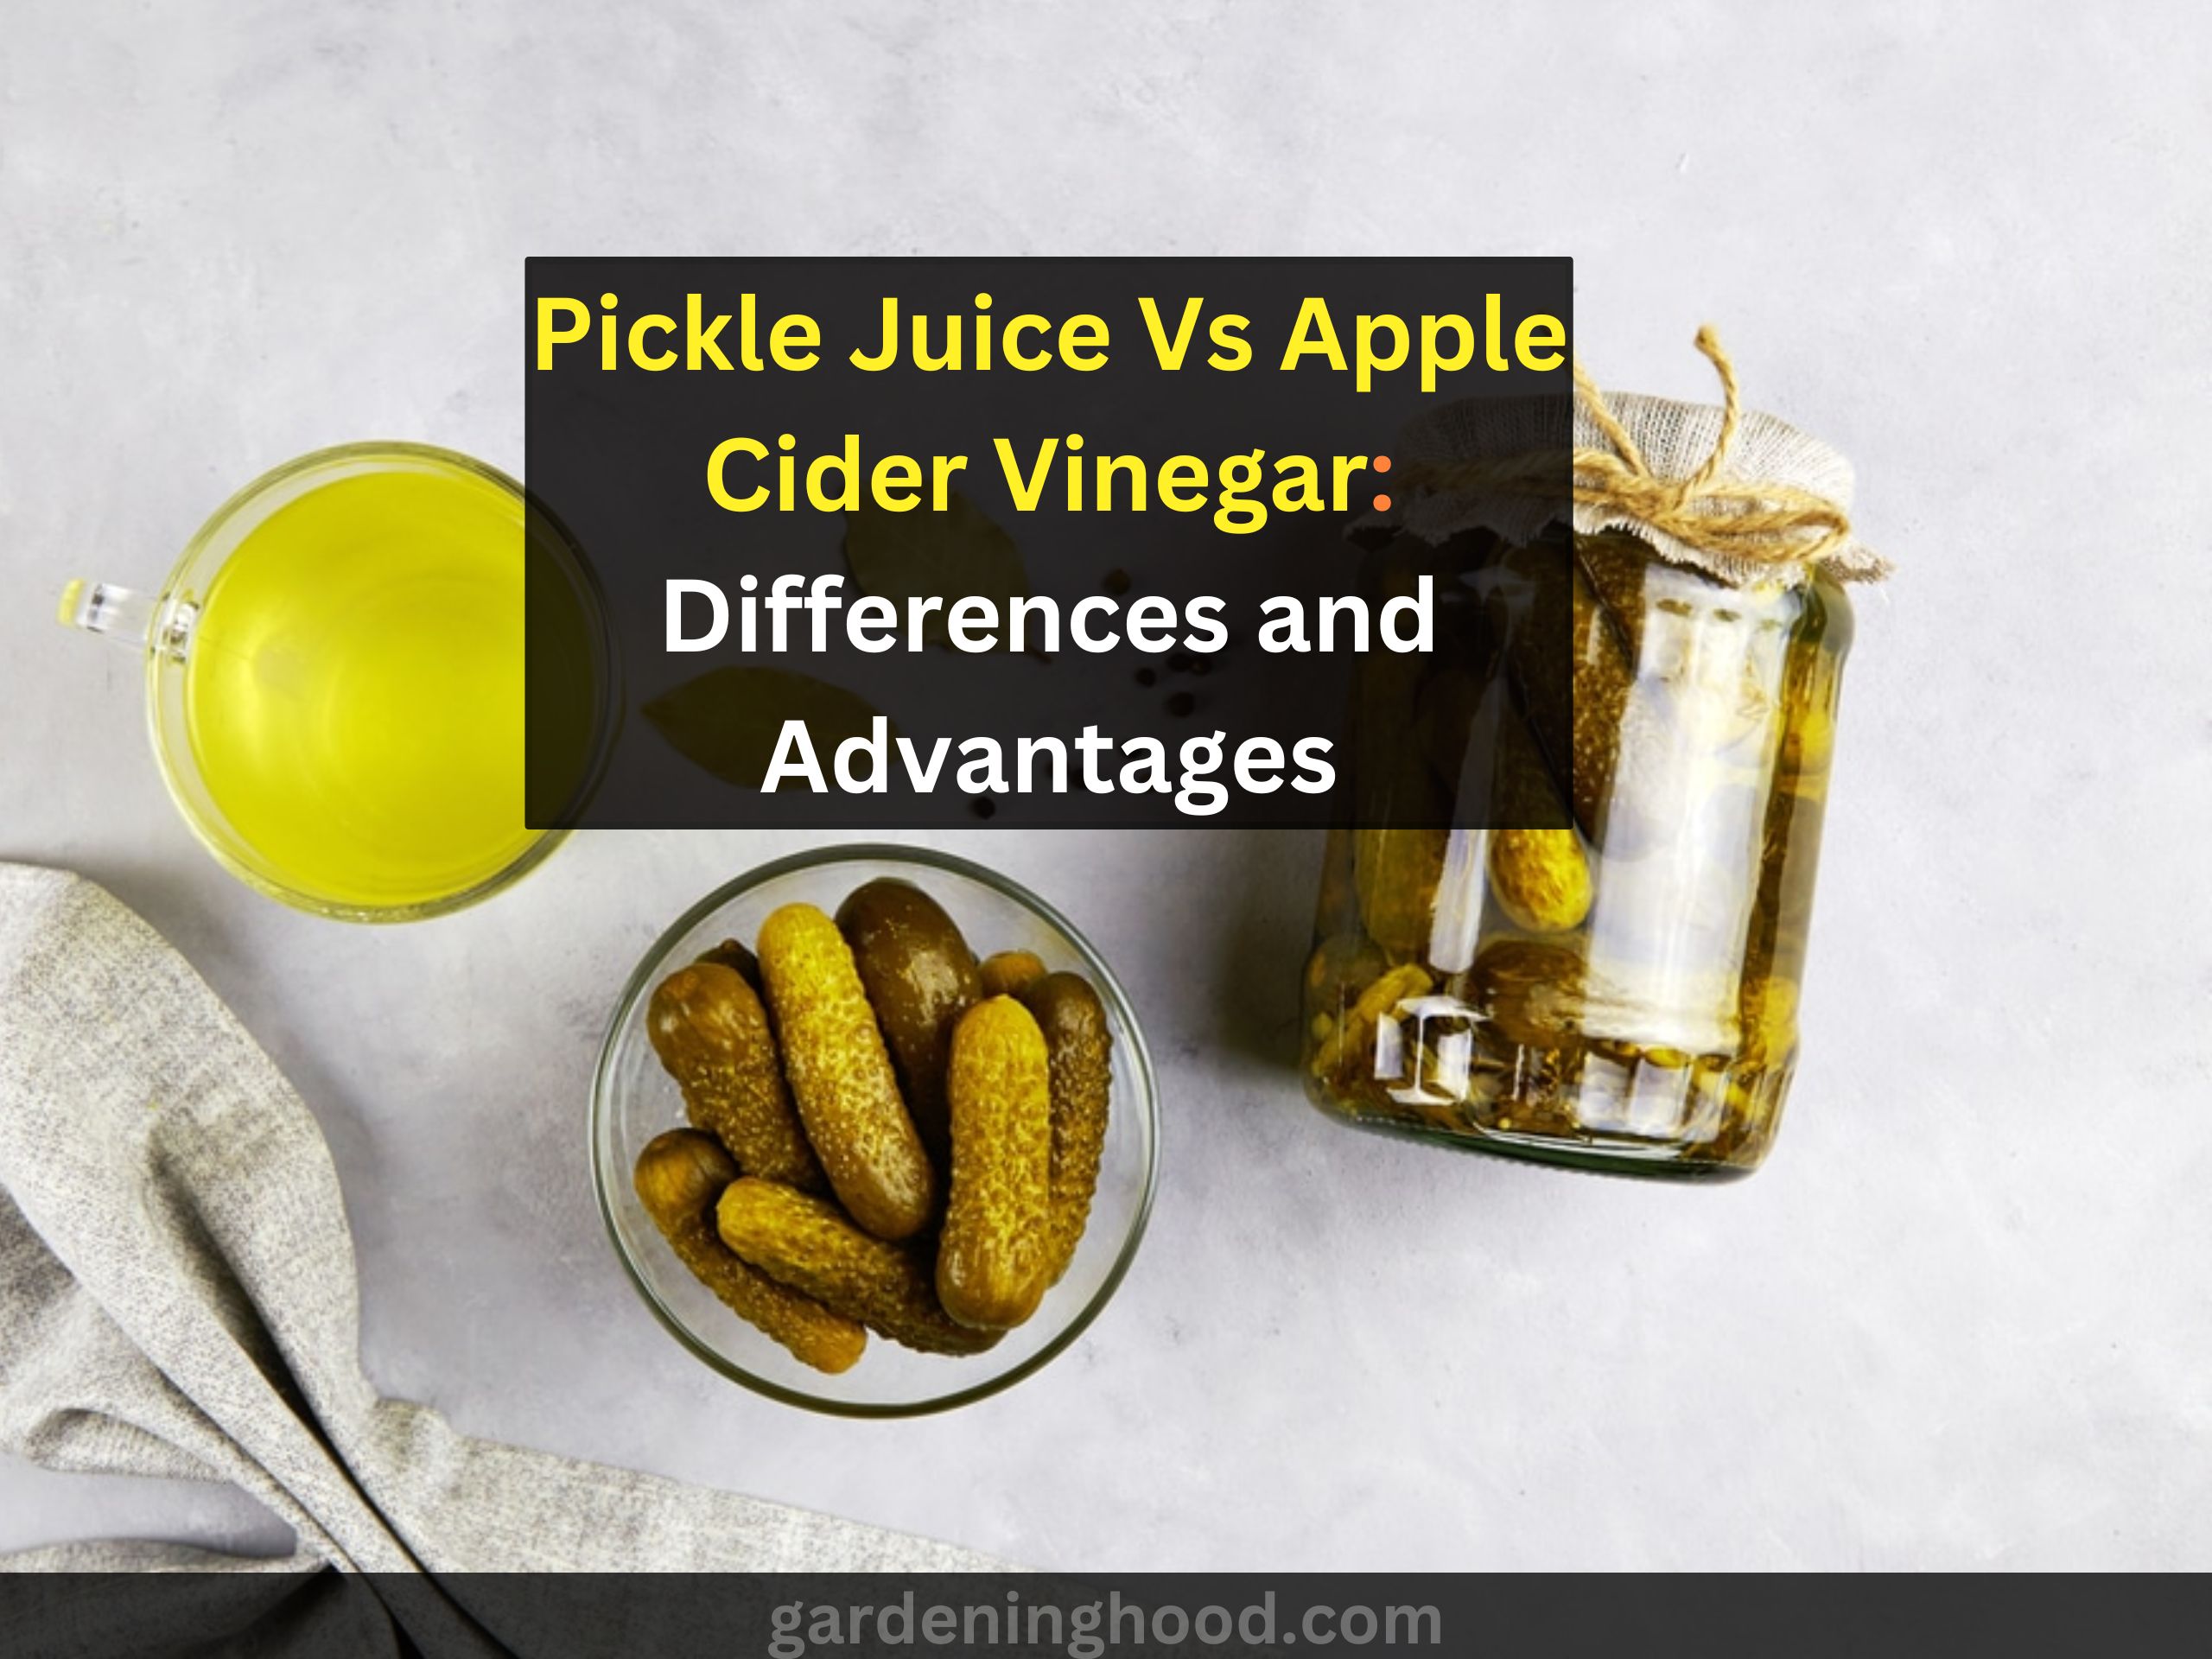 Pickle Juice Vs Apple Cider Vinegar: Differences and Advantages